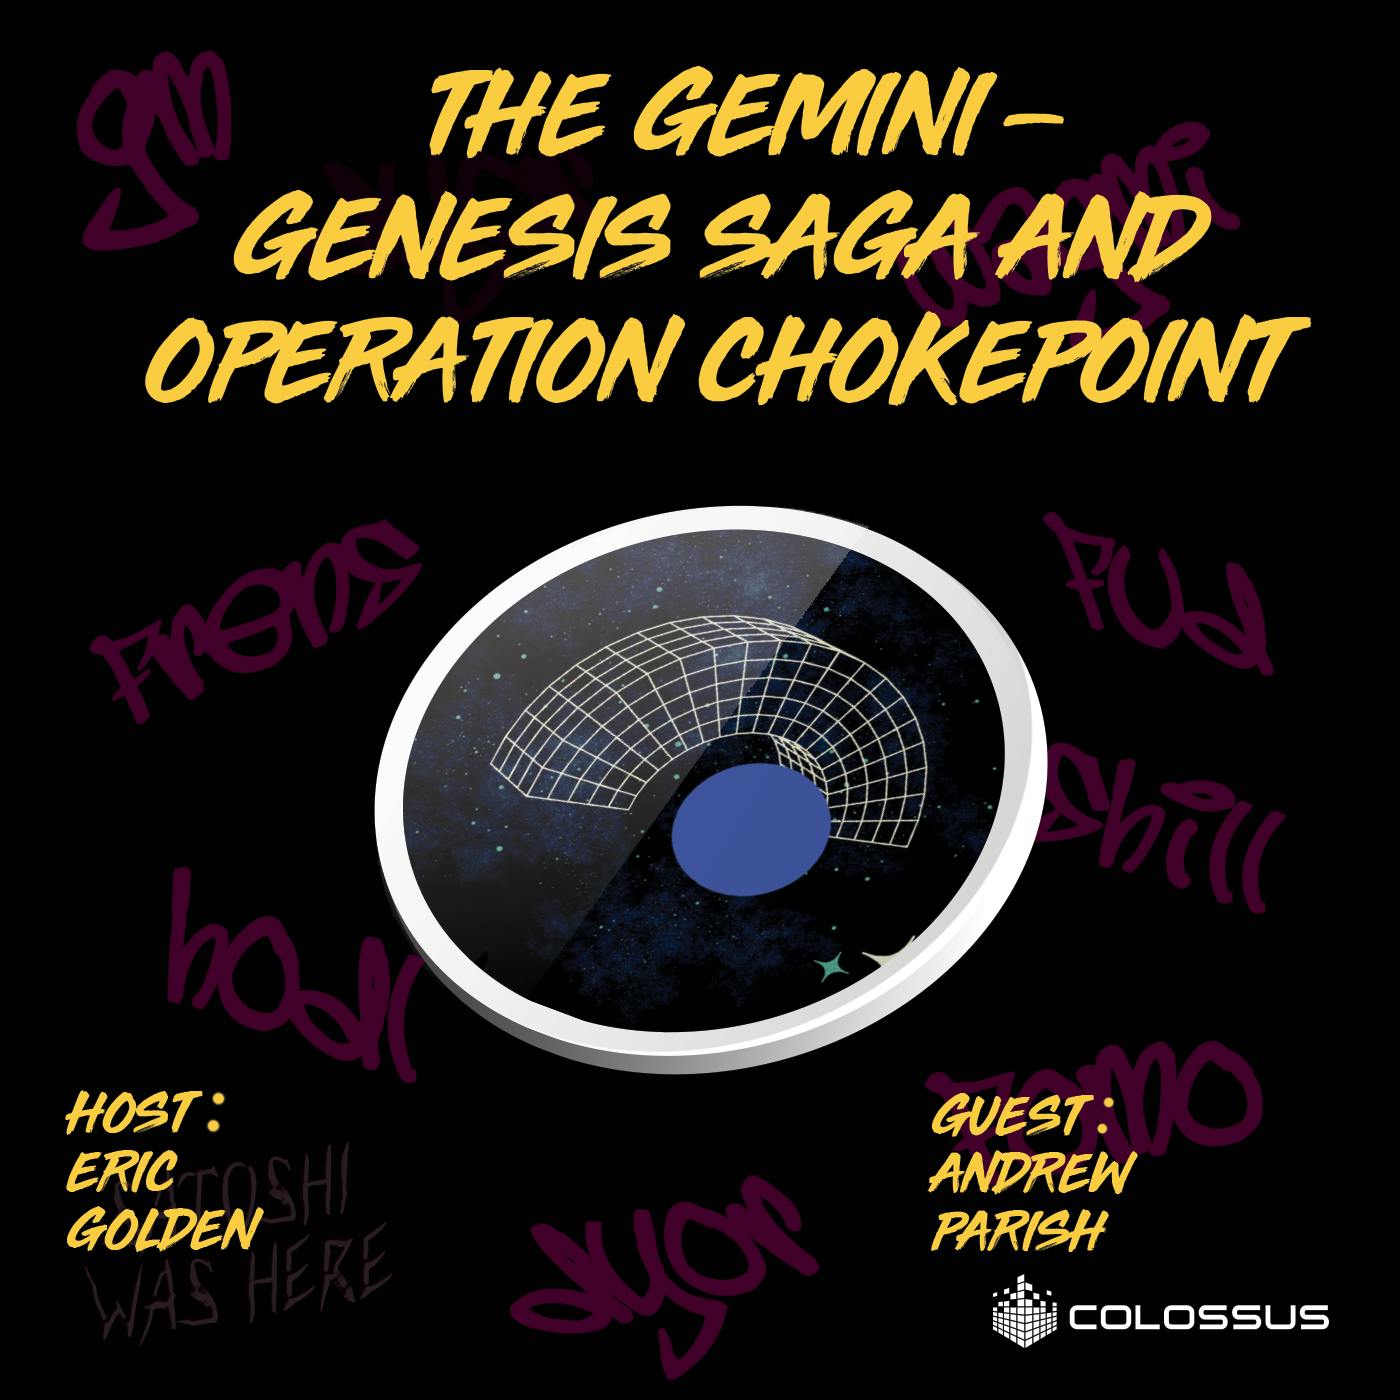 Andrew Parish: The DCG, Genesis, Gemini Saga and Operation Chokepoint - [Web3 Breakdowns, EP.59]